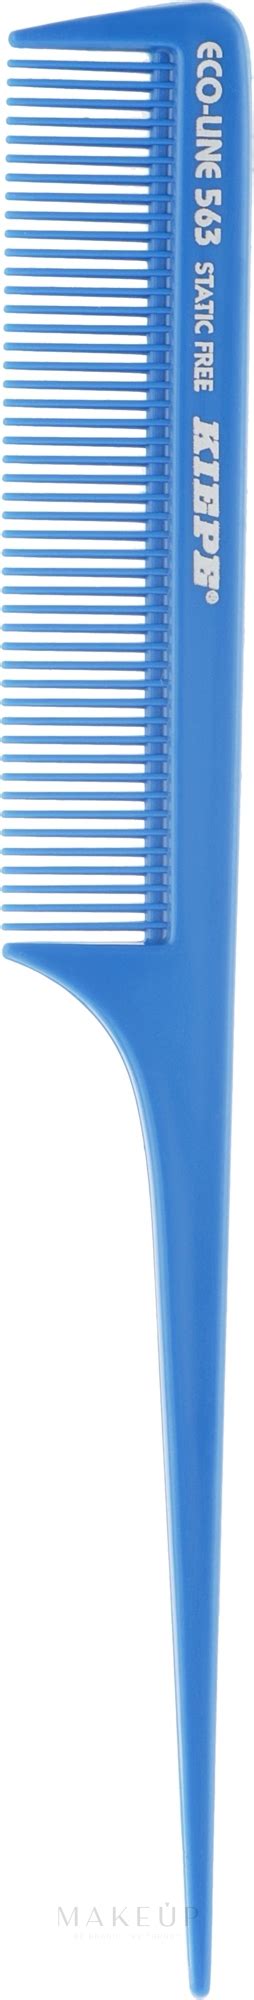 Kiepe Eco Line Static Free Teasing Brush With Plastic Tail MAKEUP